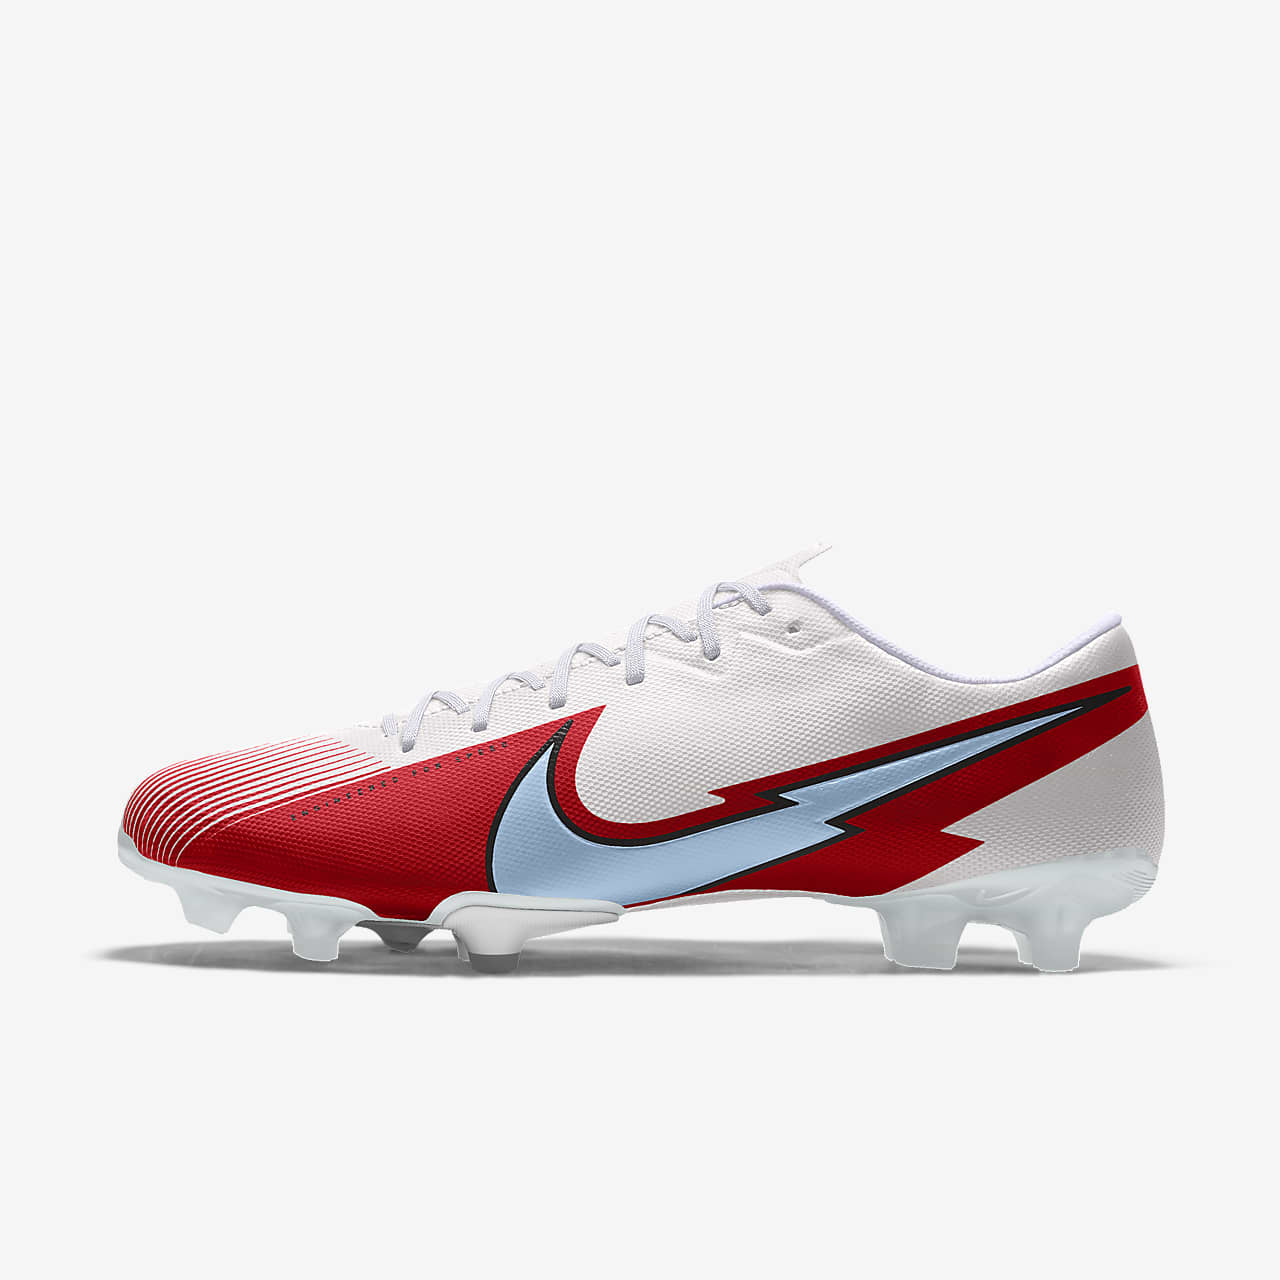 Custom Firm-Ground Football Boot. Nike LU